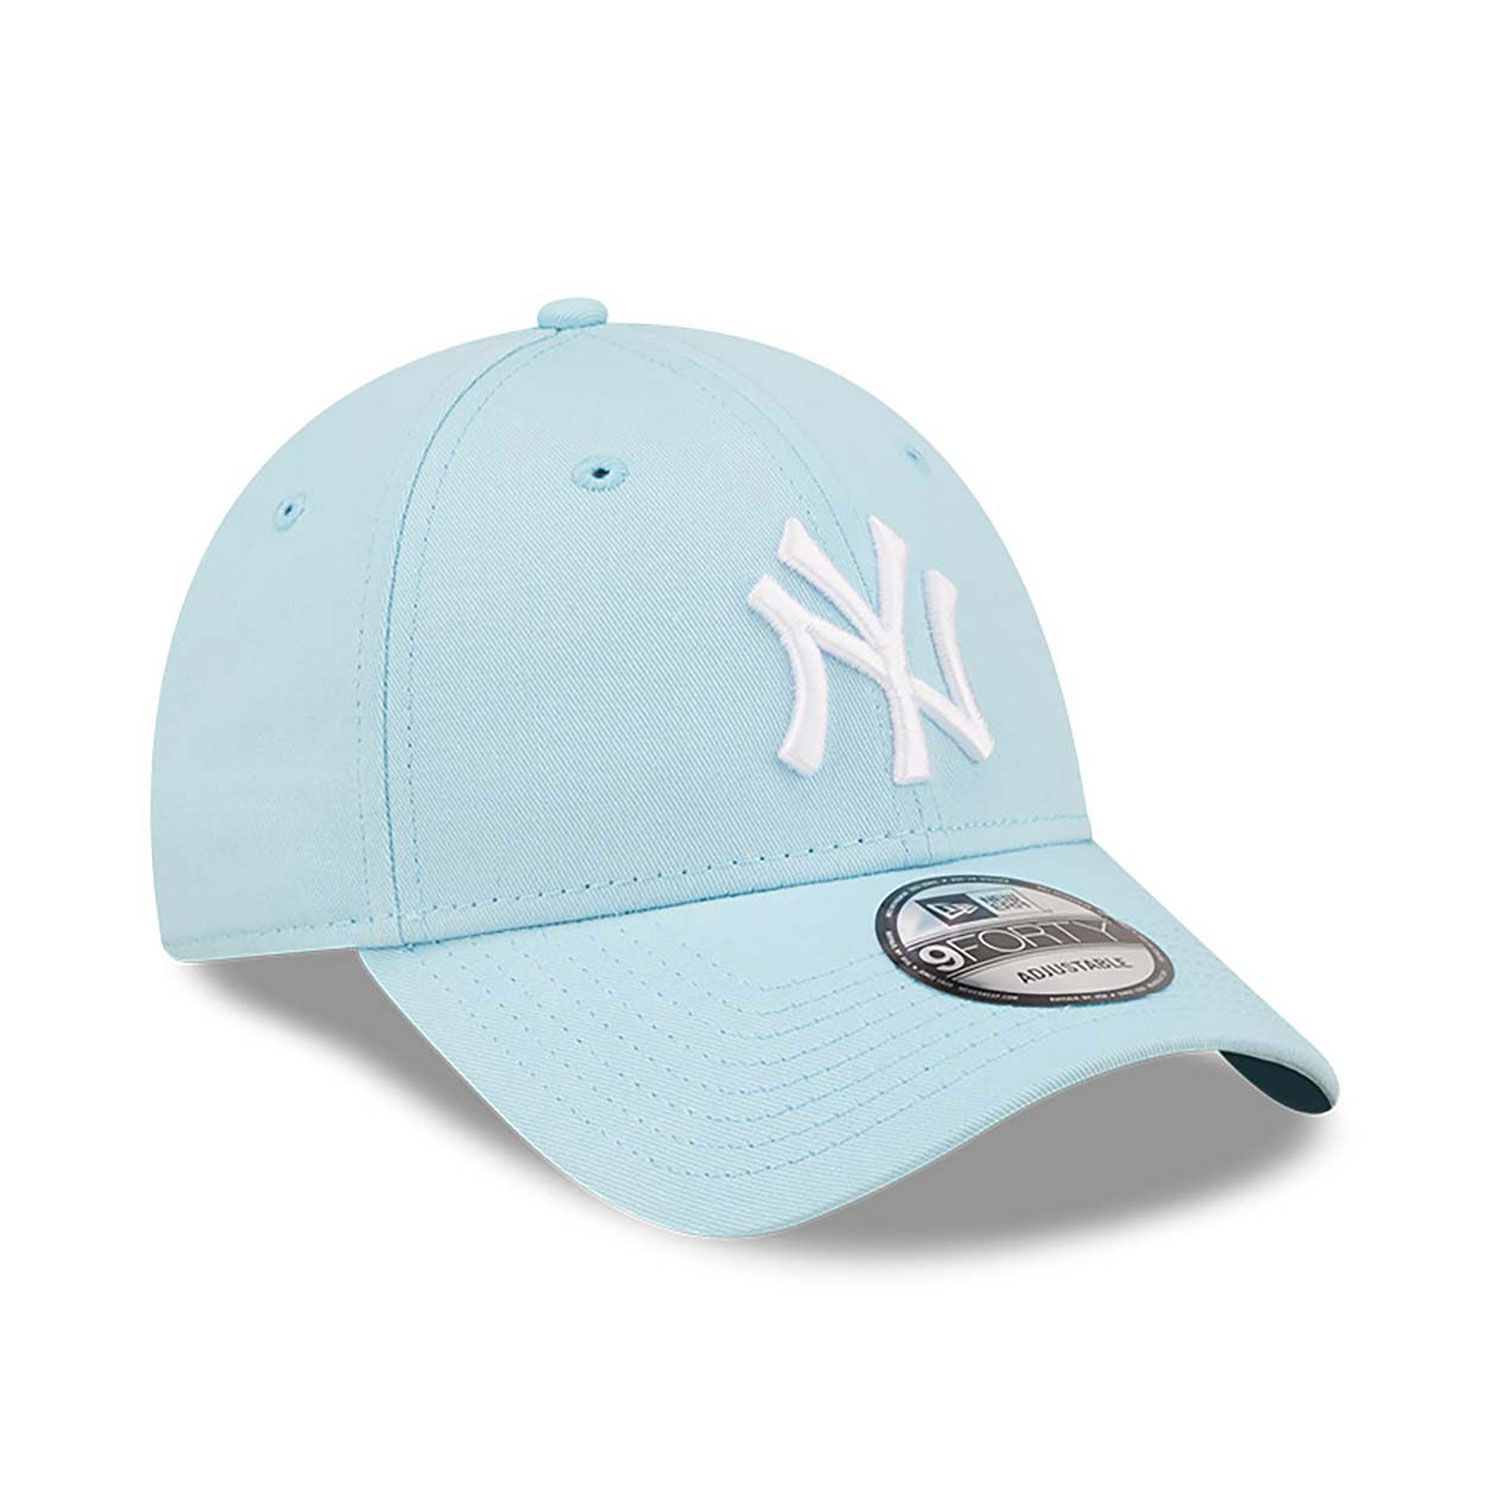 Official Baby New York Yankees Hats, Yankees Cap, Yankees Hats